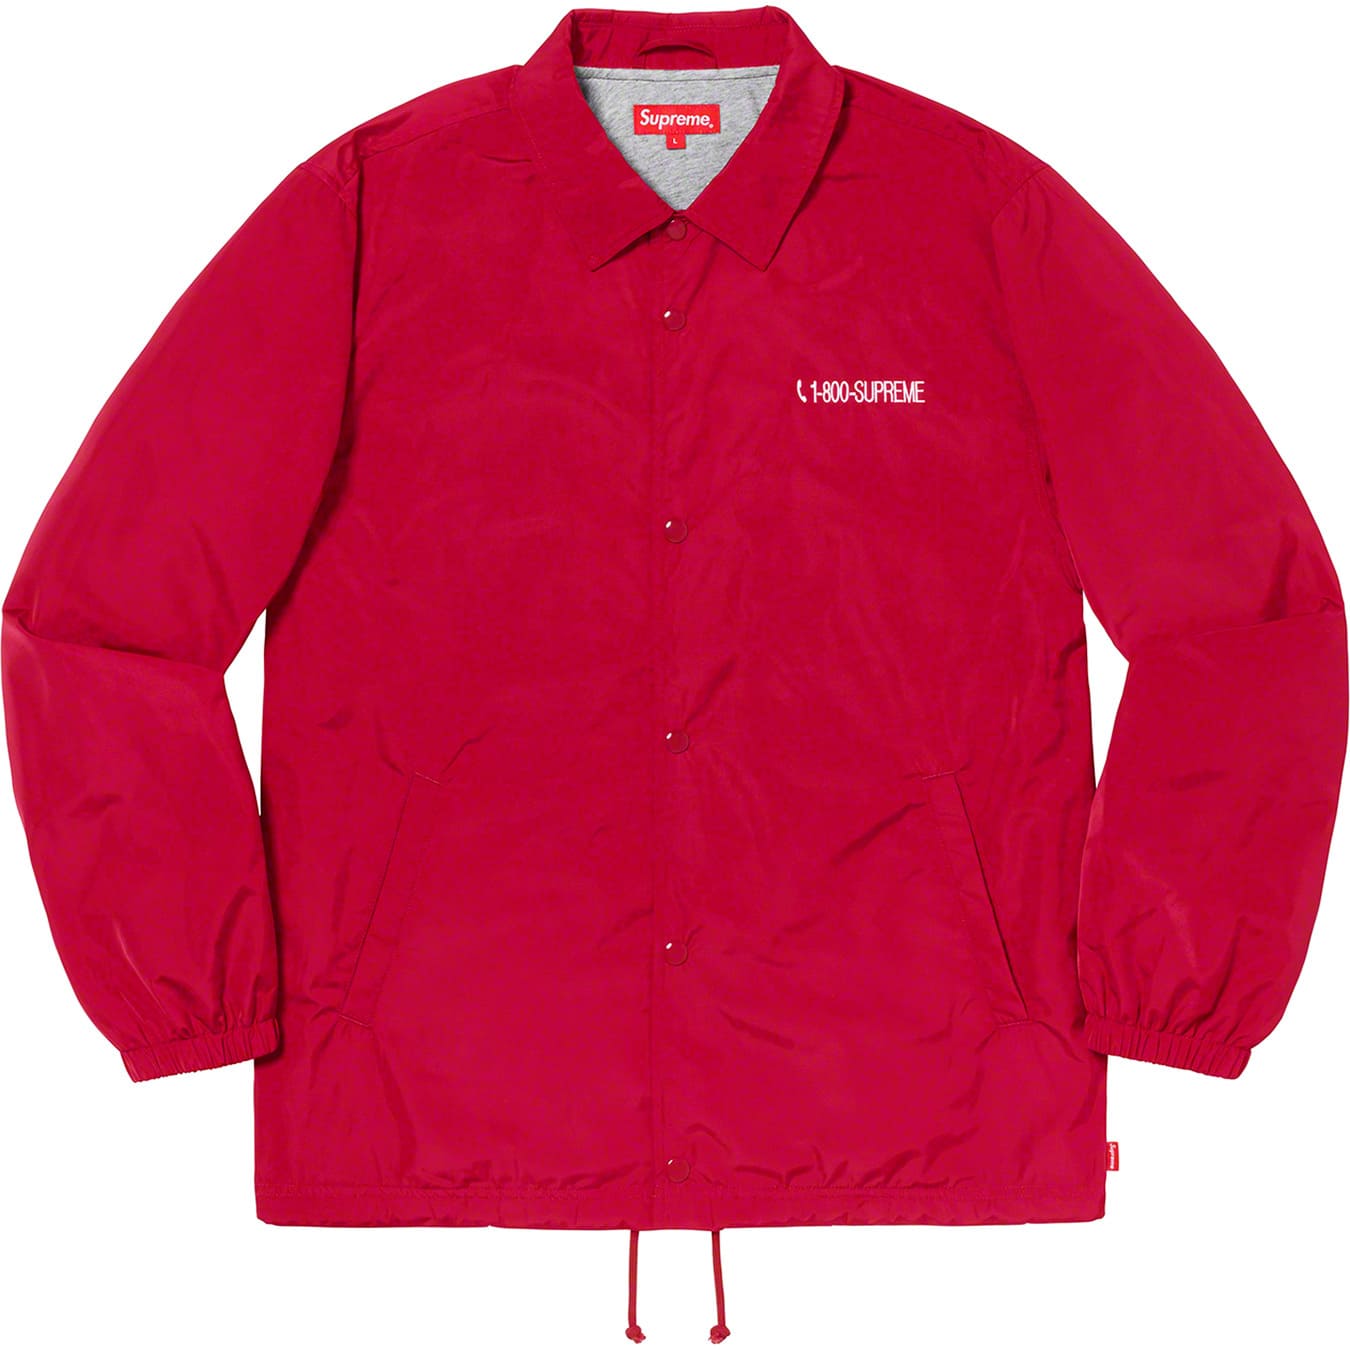 Supreme 1-800 Coaches Jacket